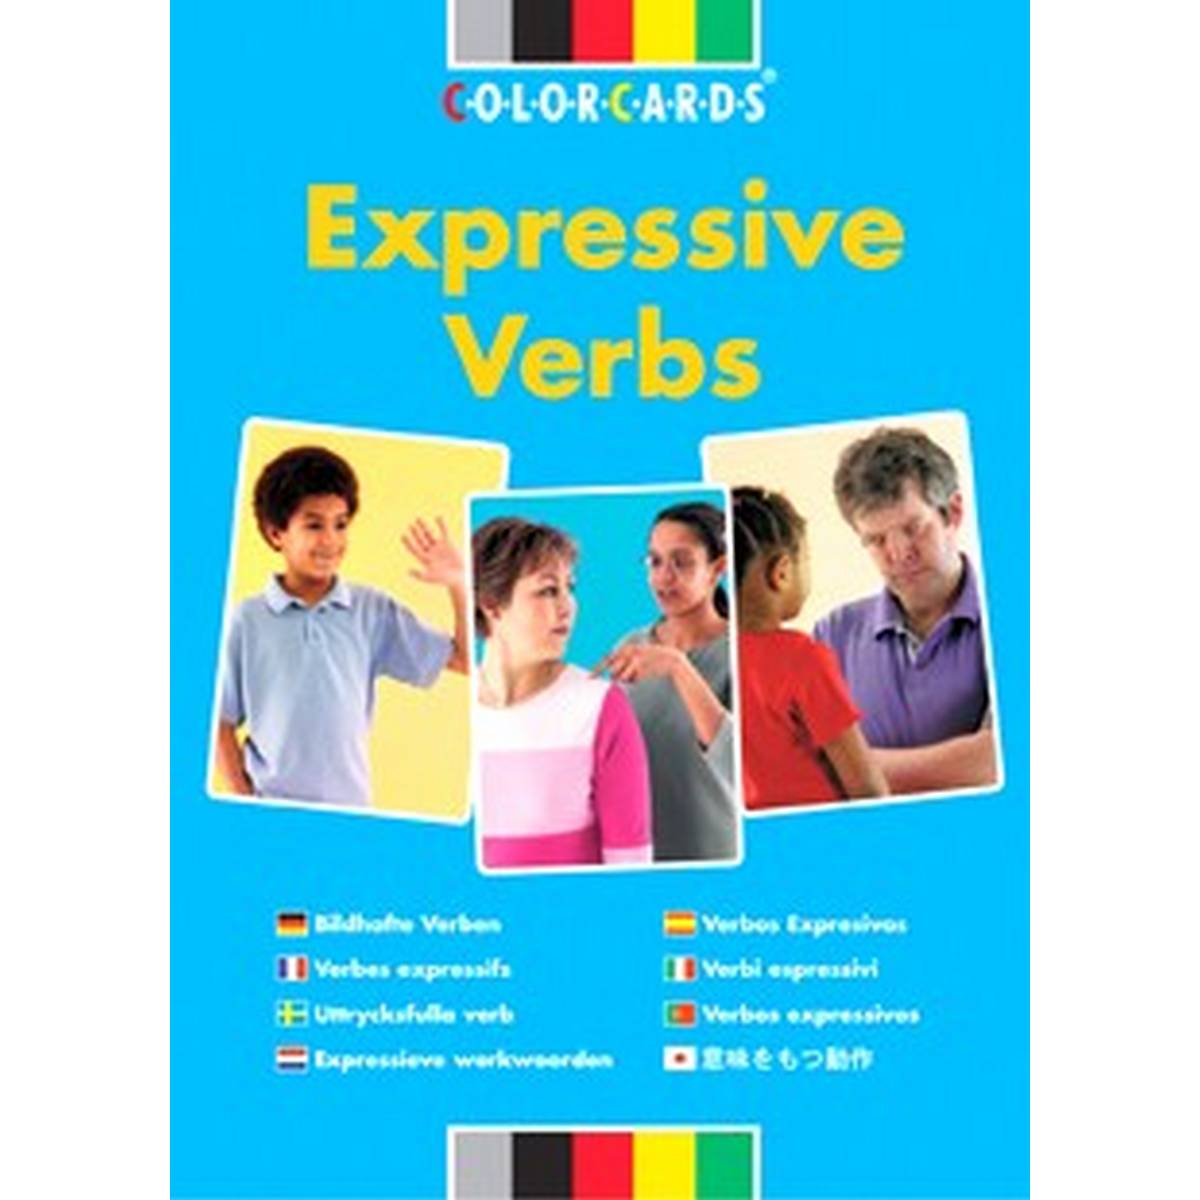 ColorCards: Expressive Verbs